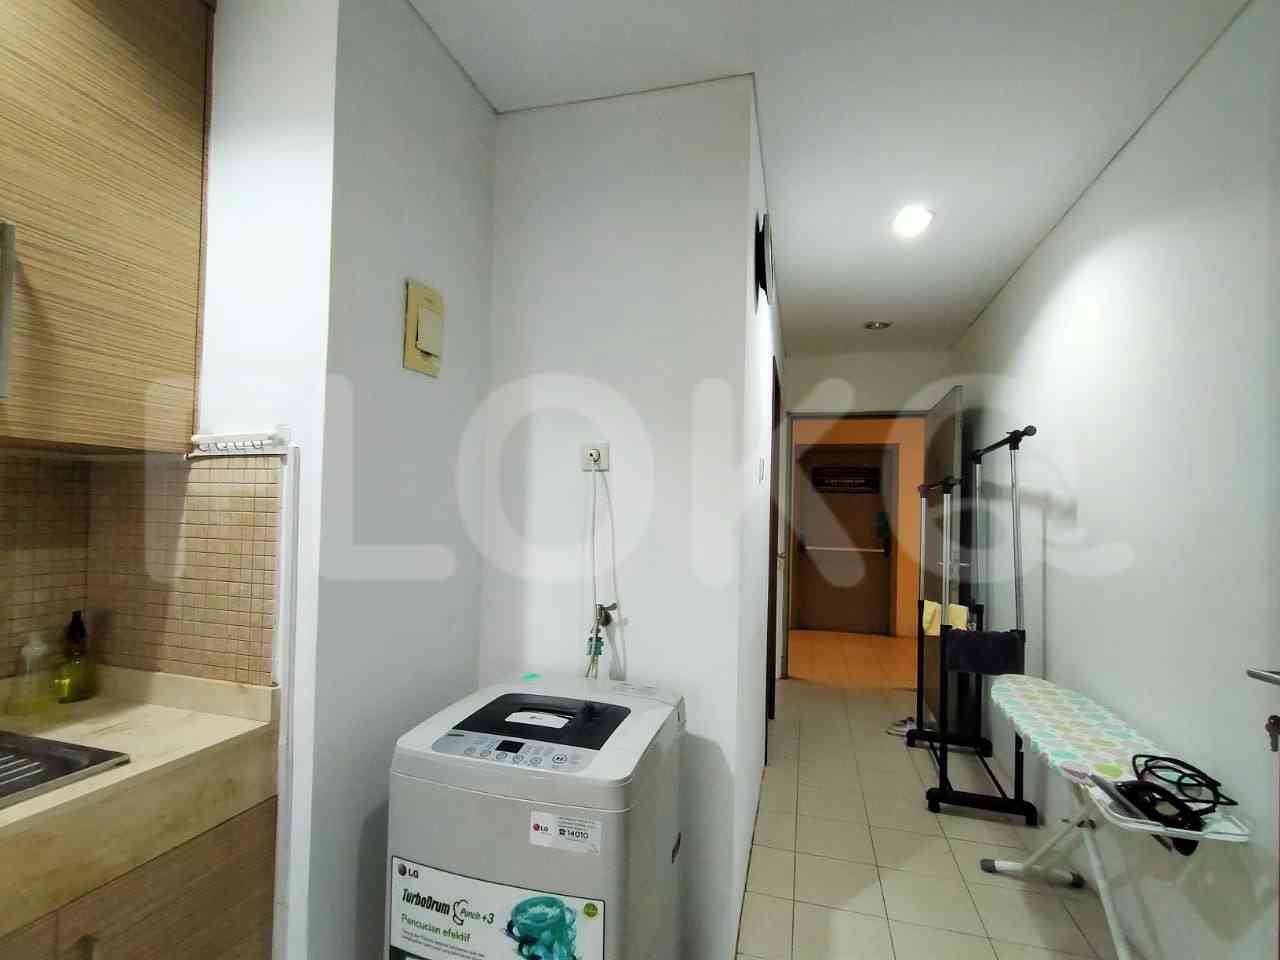 2 Bedroom on 2nd Floor for Rent in Kemang Village Residence - fke4d7 4